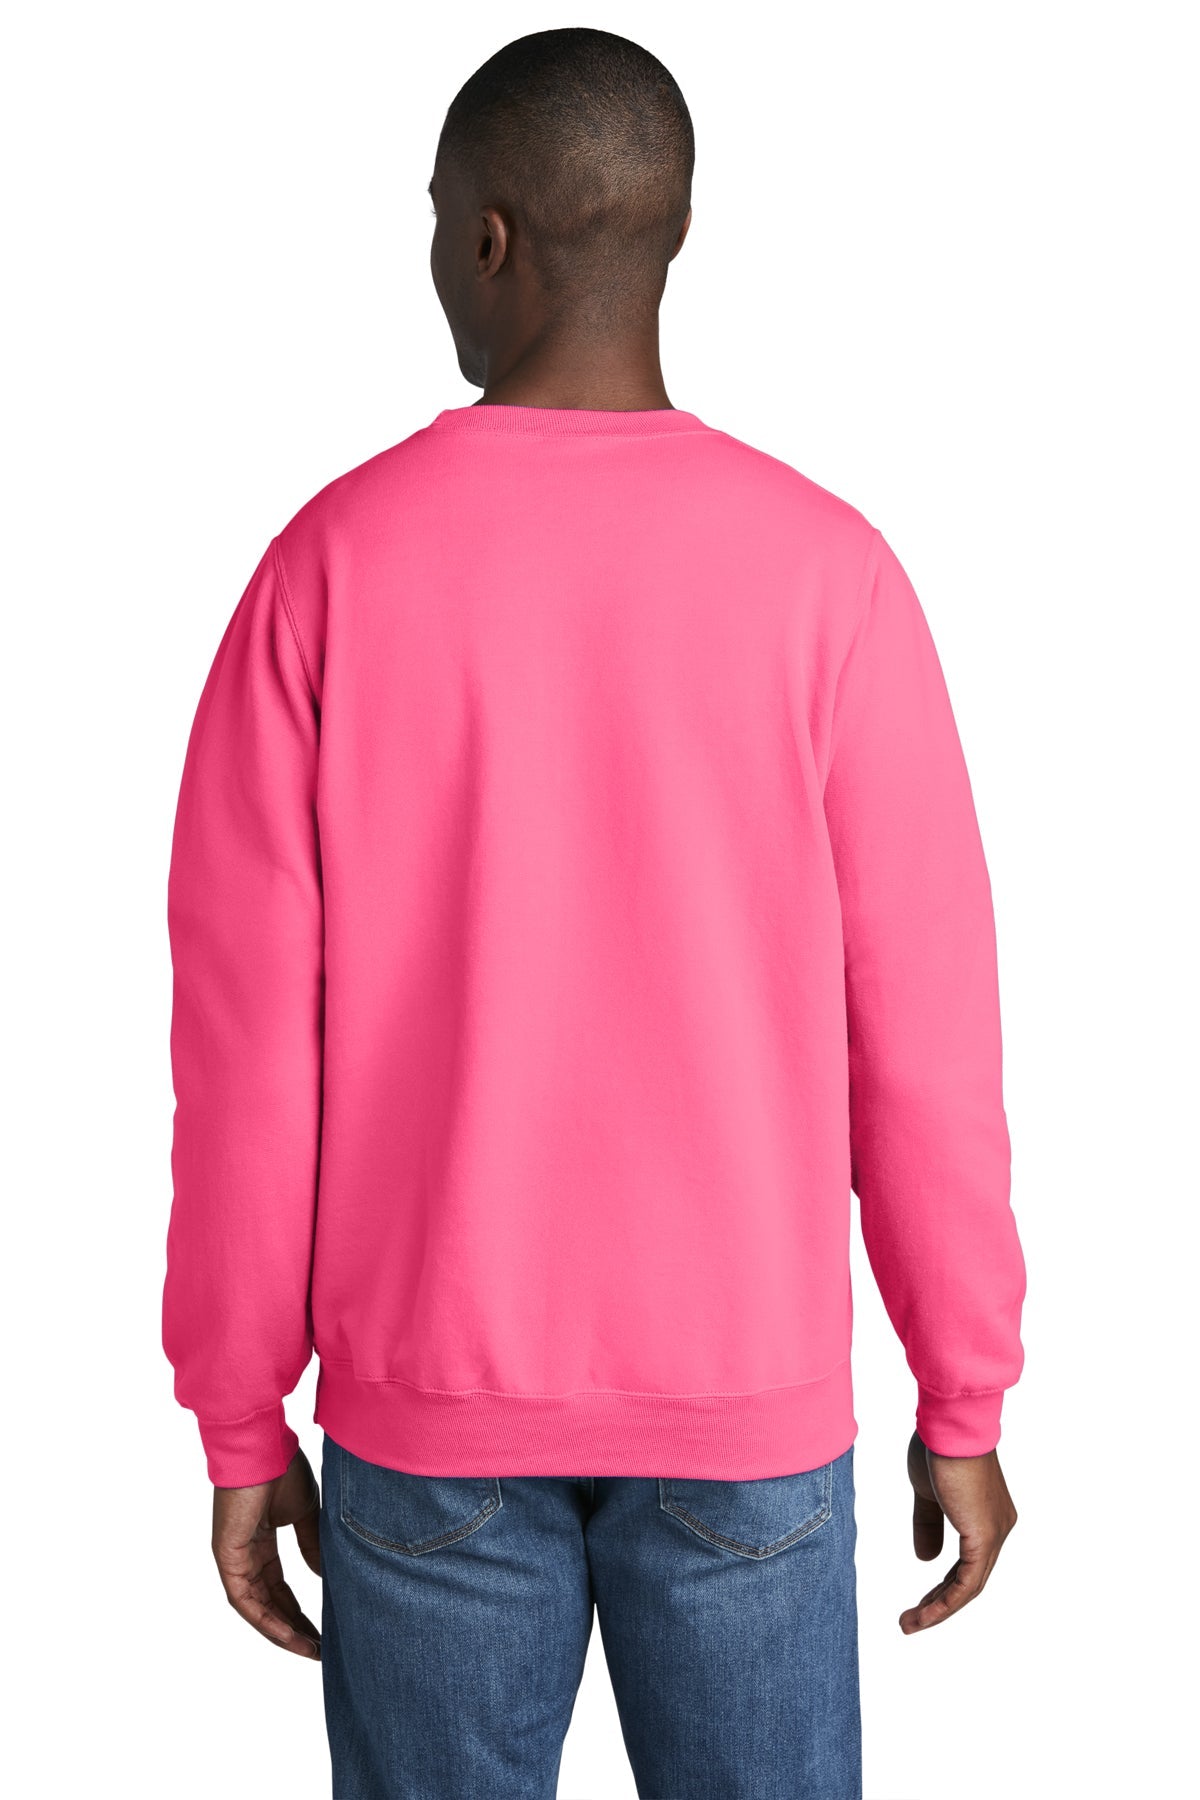 port & company_pc78 _neon pink_company_logo_sweatshirts